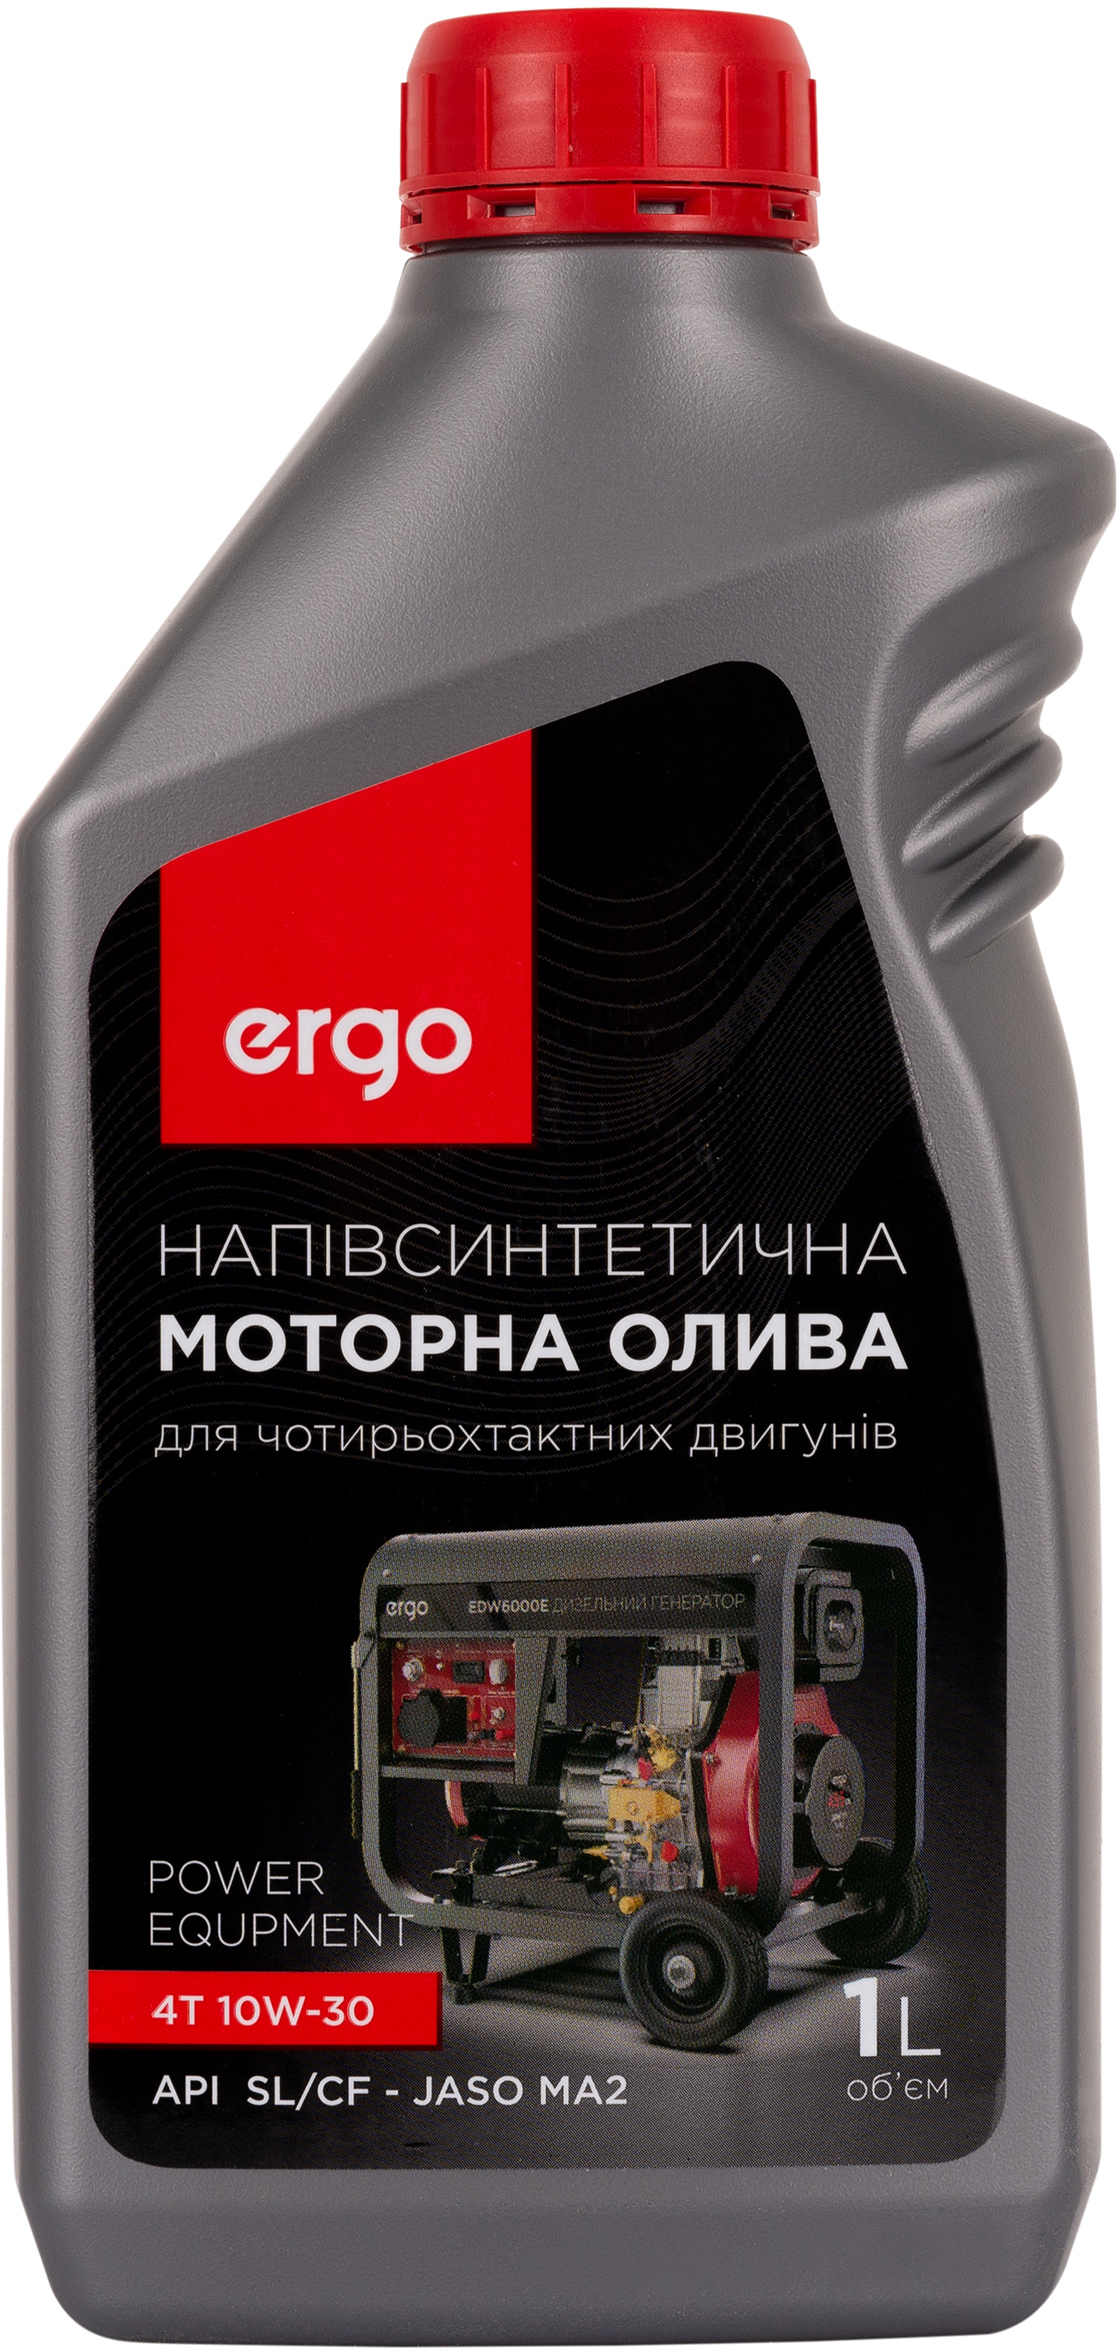 Цена моторное масло Ergo 10W-30, 1 л в Херсоне